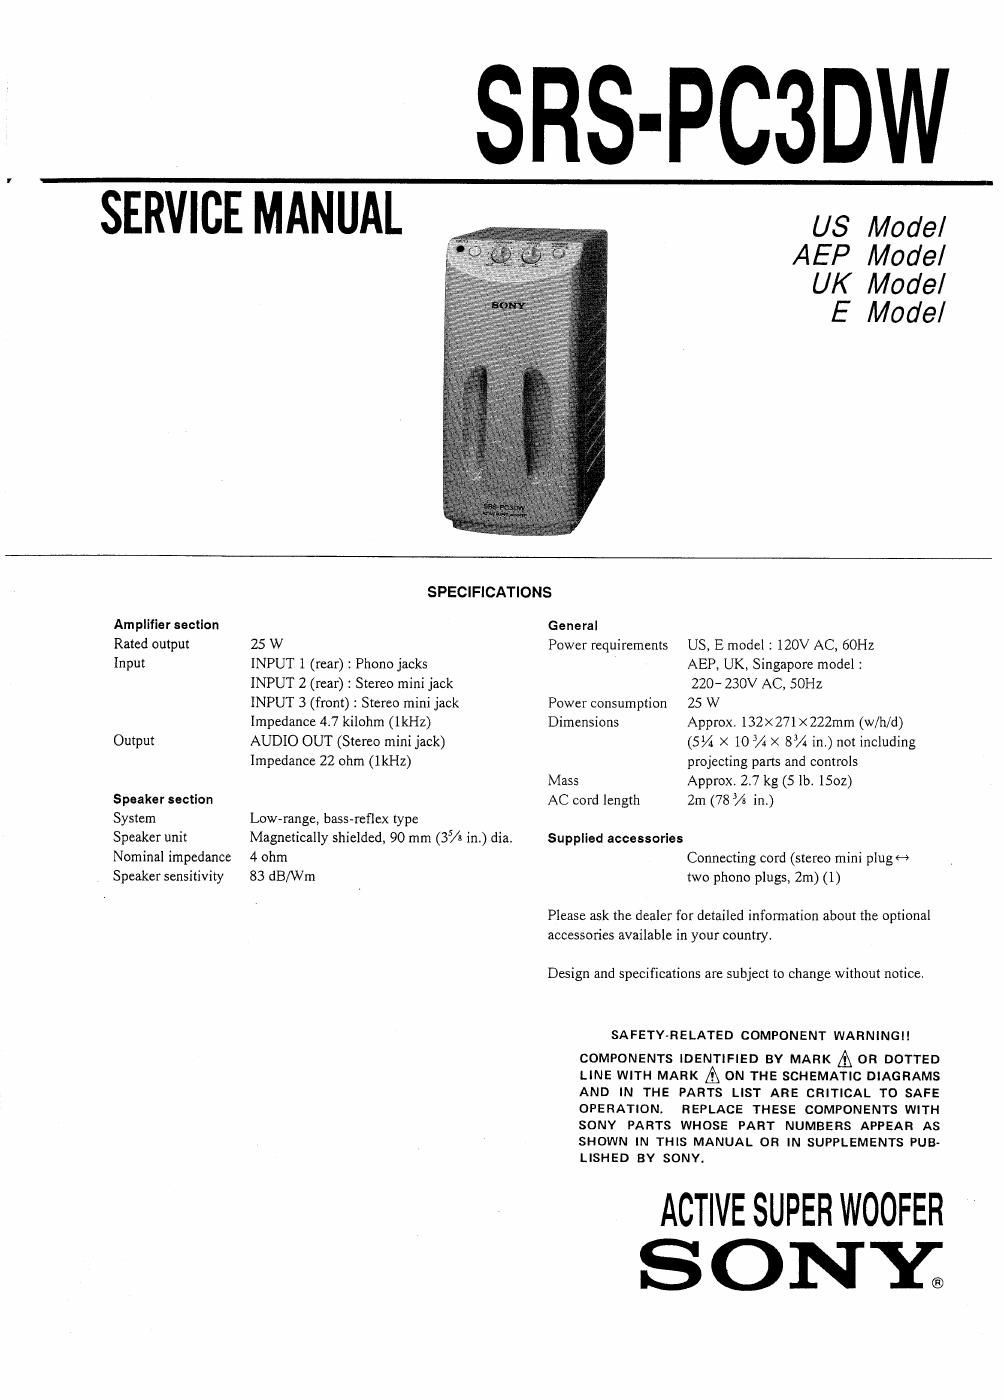 sony srs pc 3 dw service manual